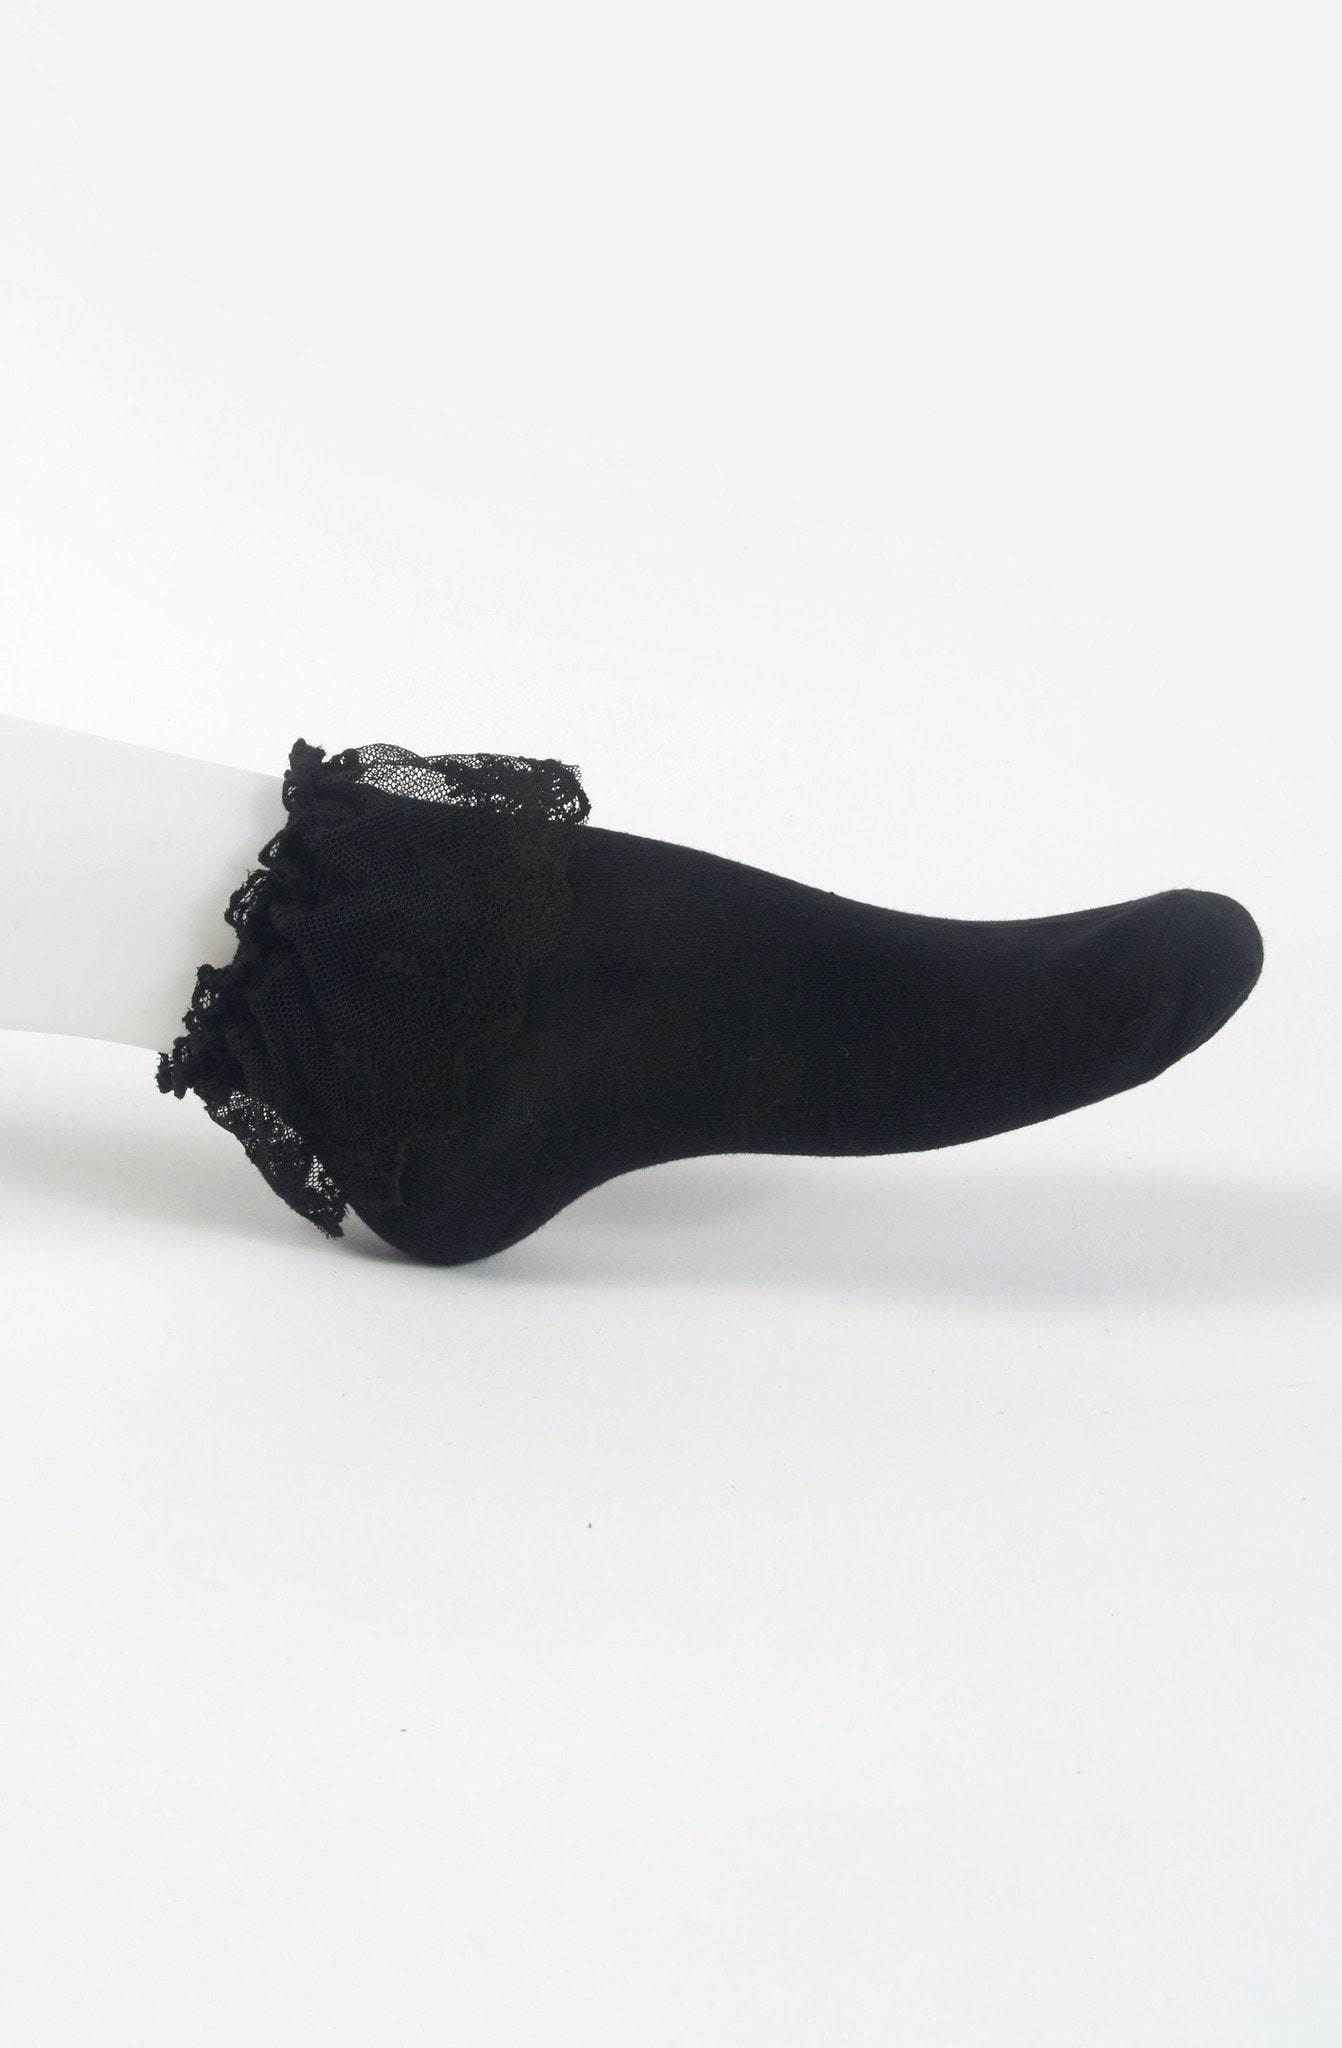 White/black Lace Socks,lolita Lace Trim Ankle Socks,frilly Socks